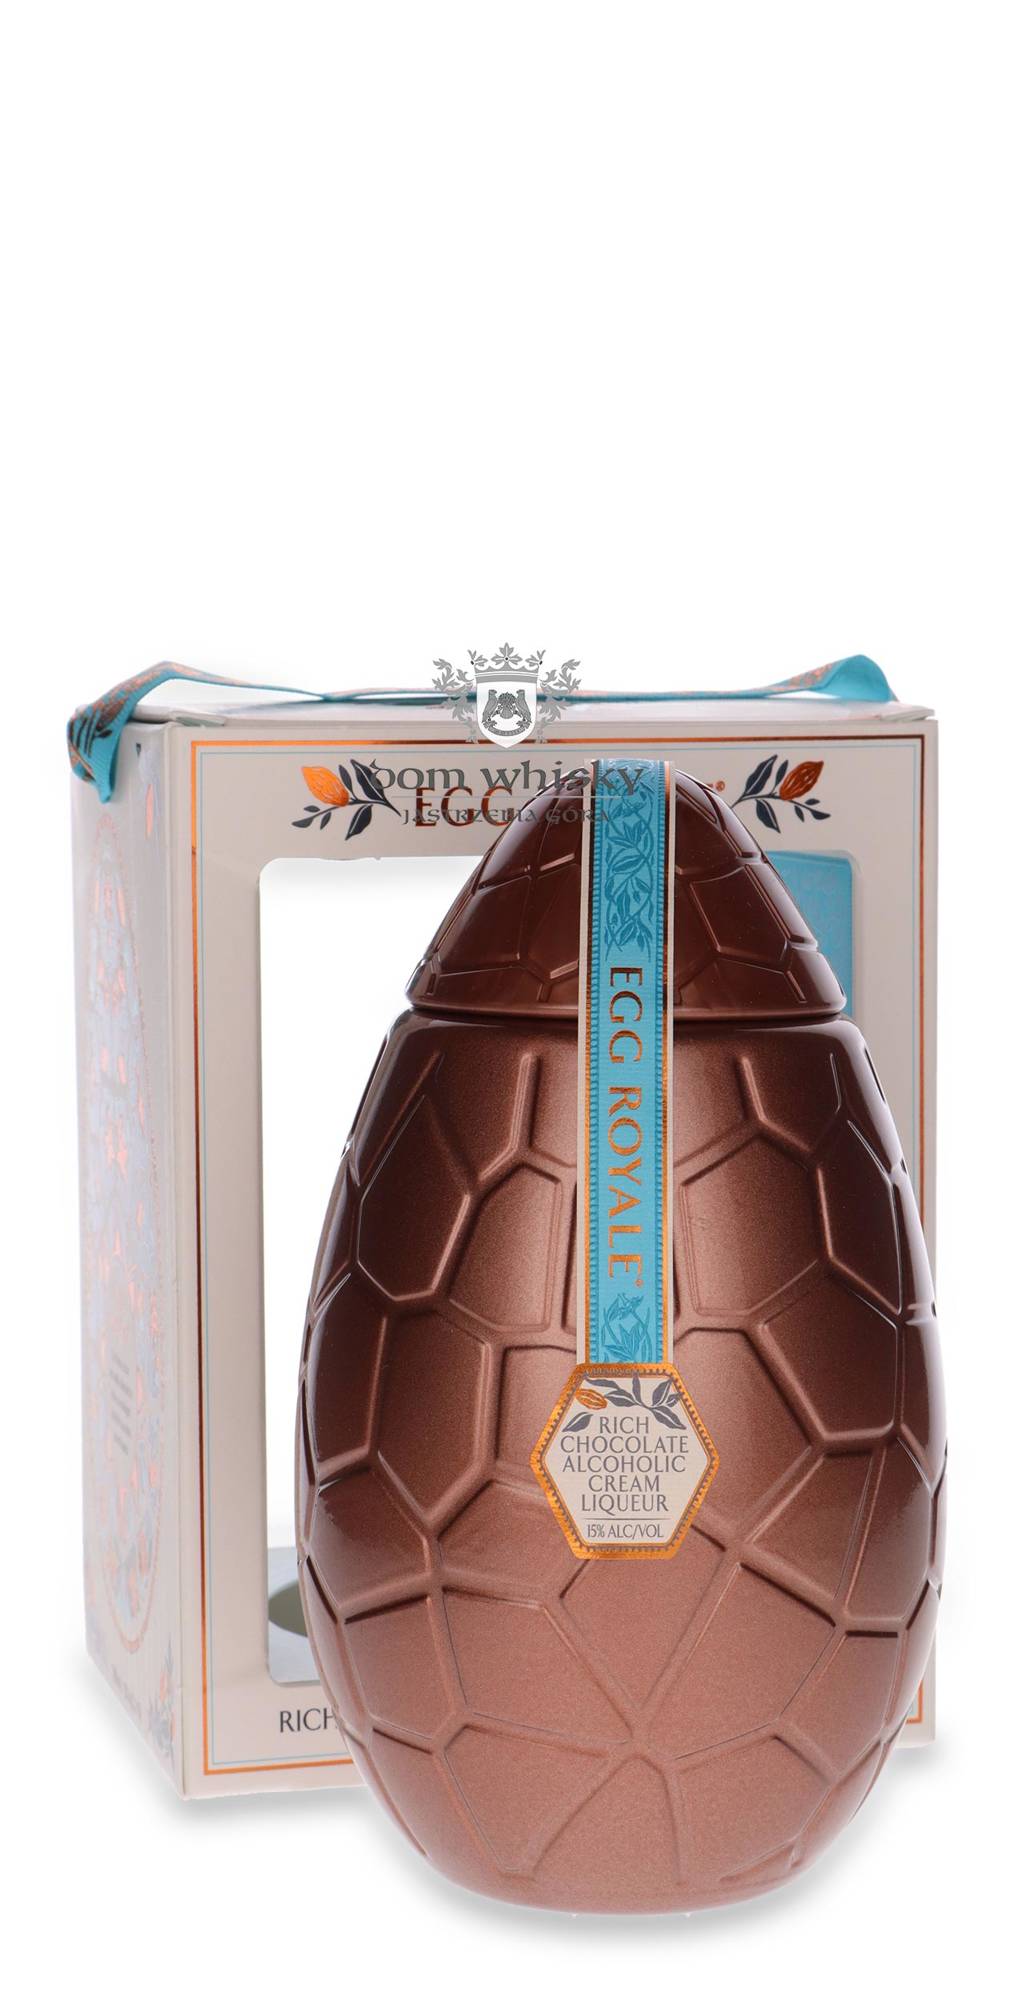 / Royale Liqueur Chocolate Dom / Whisky Egg 0,7l Cream | 15%